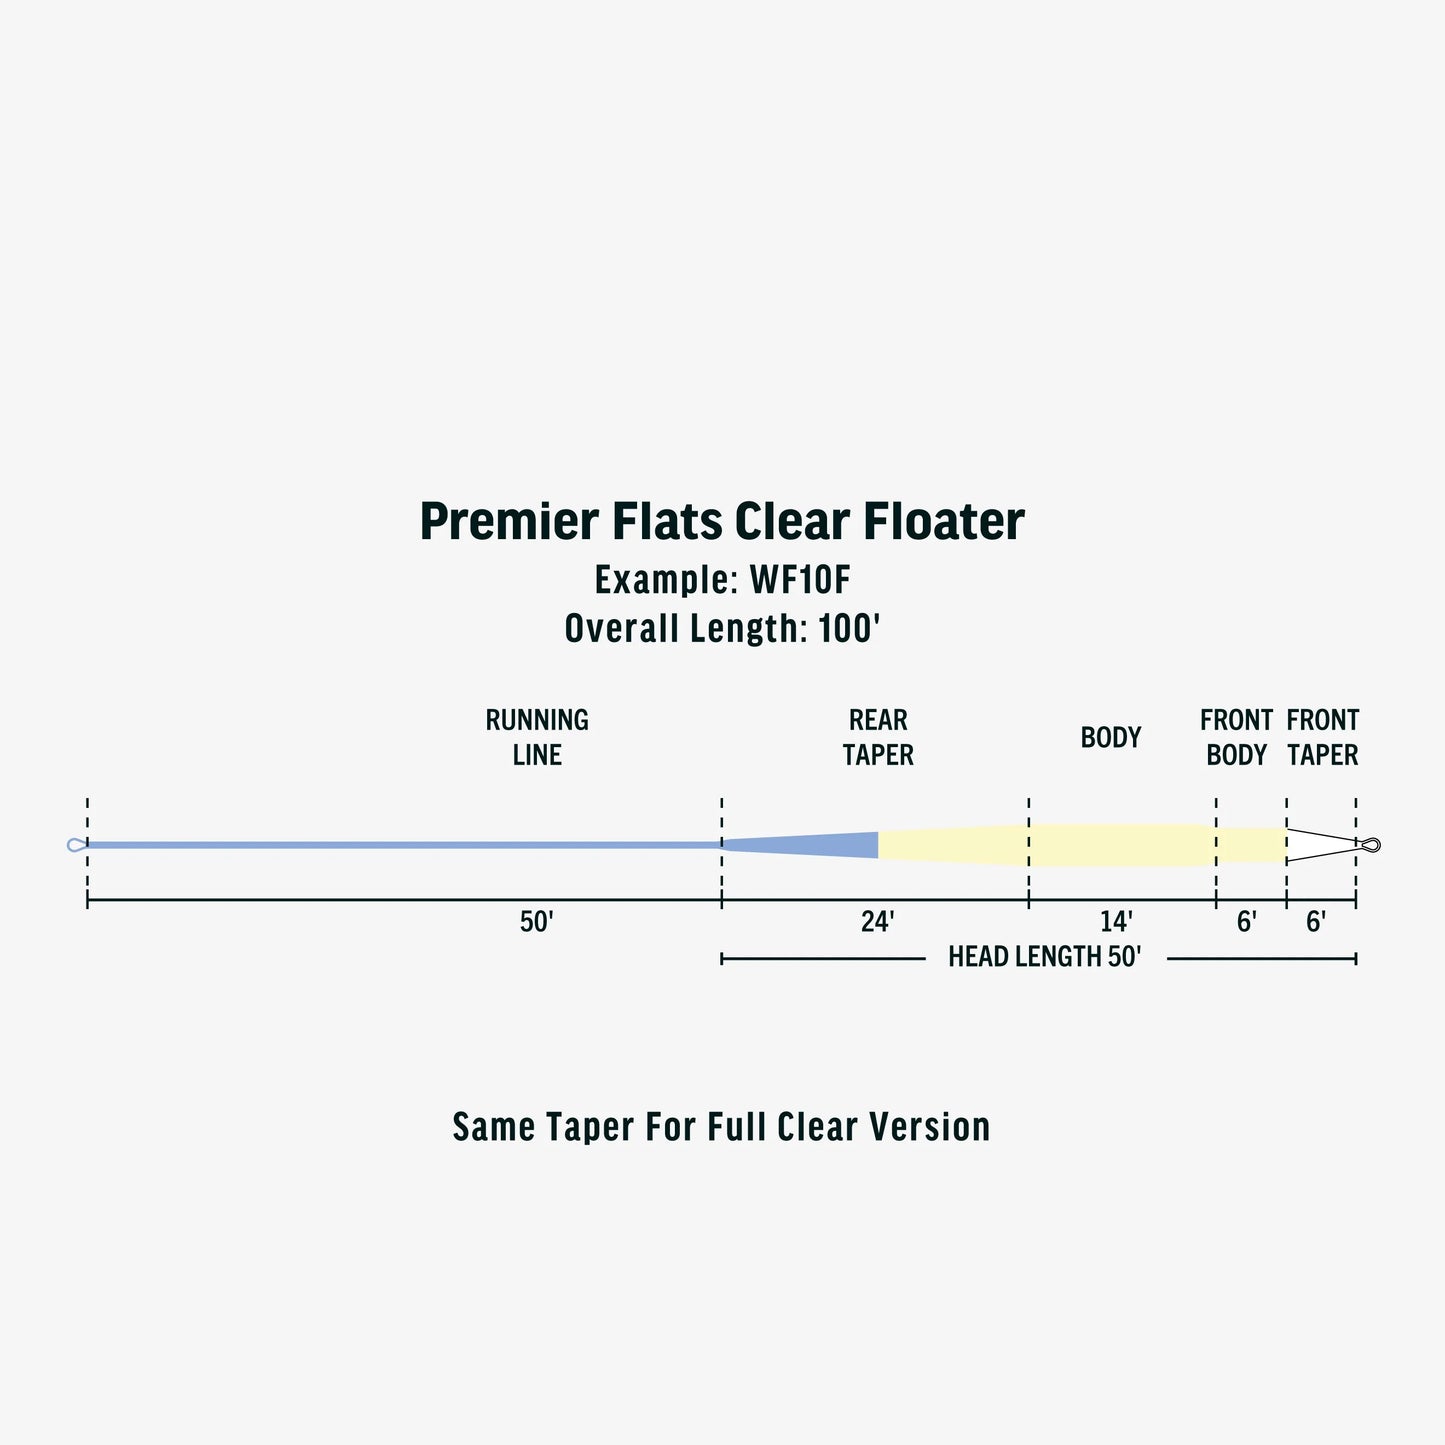 Premier Flats Clear Floater